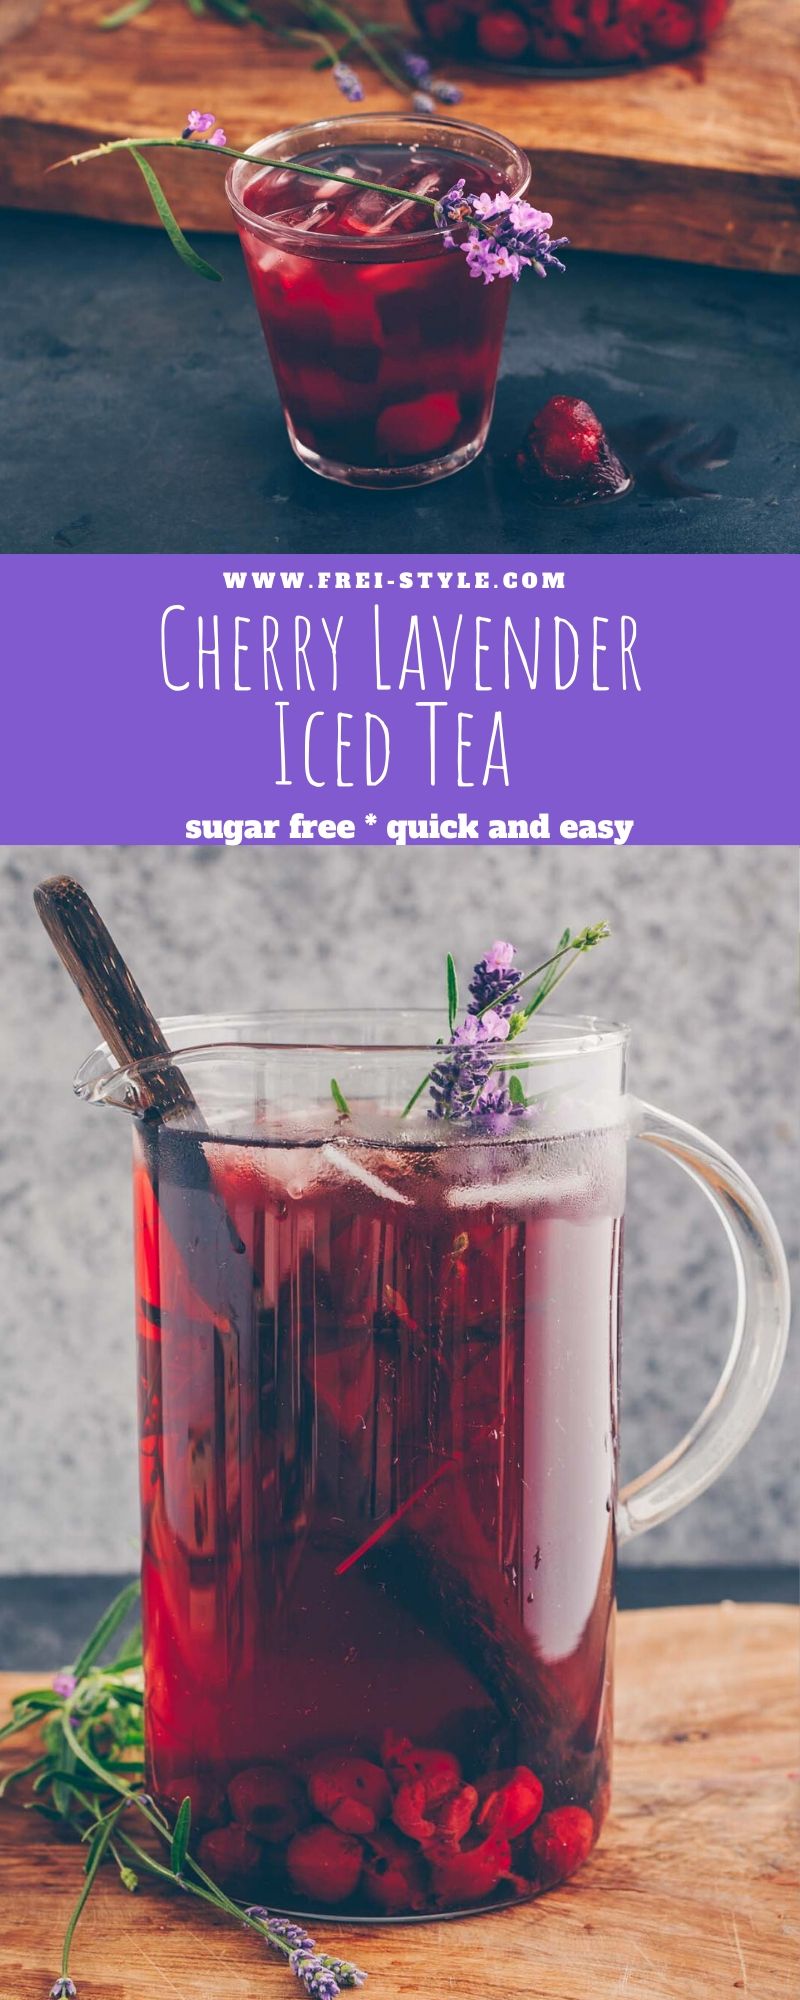 Cherry Lavender iced tea